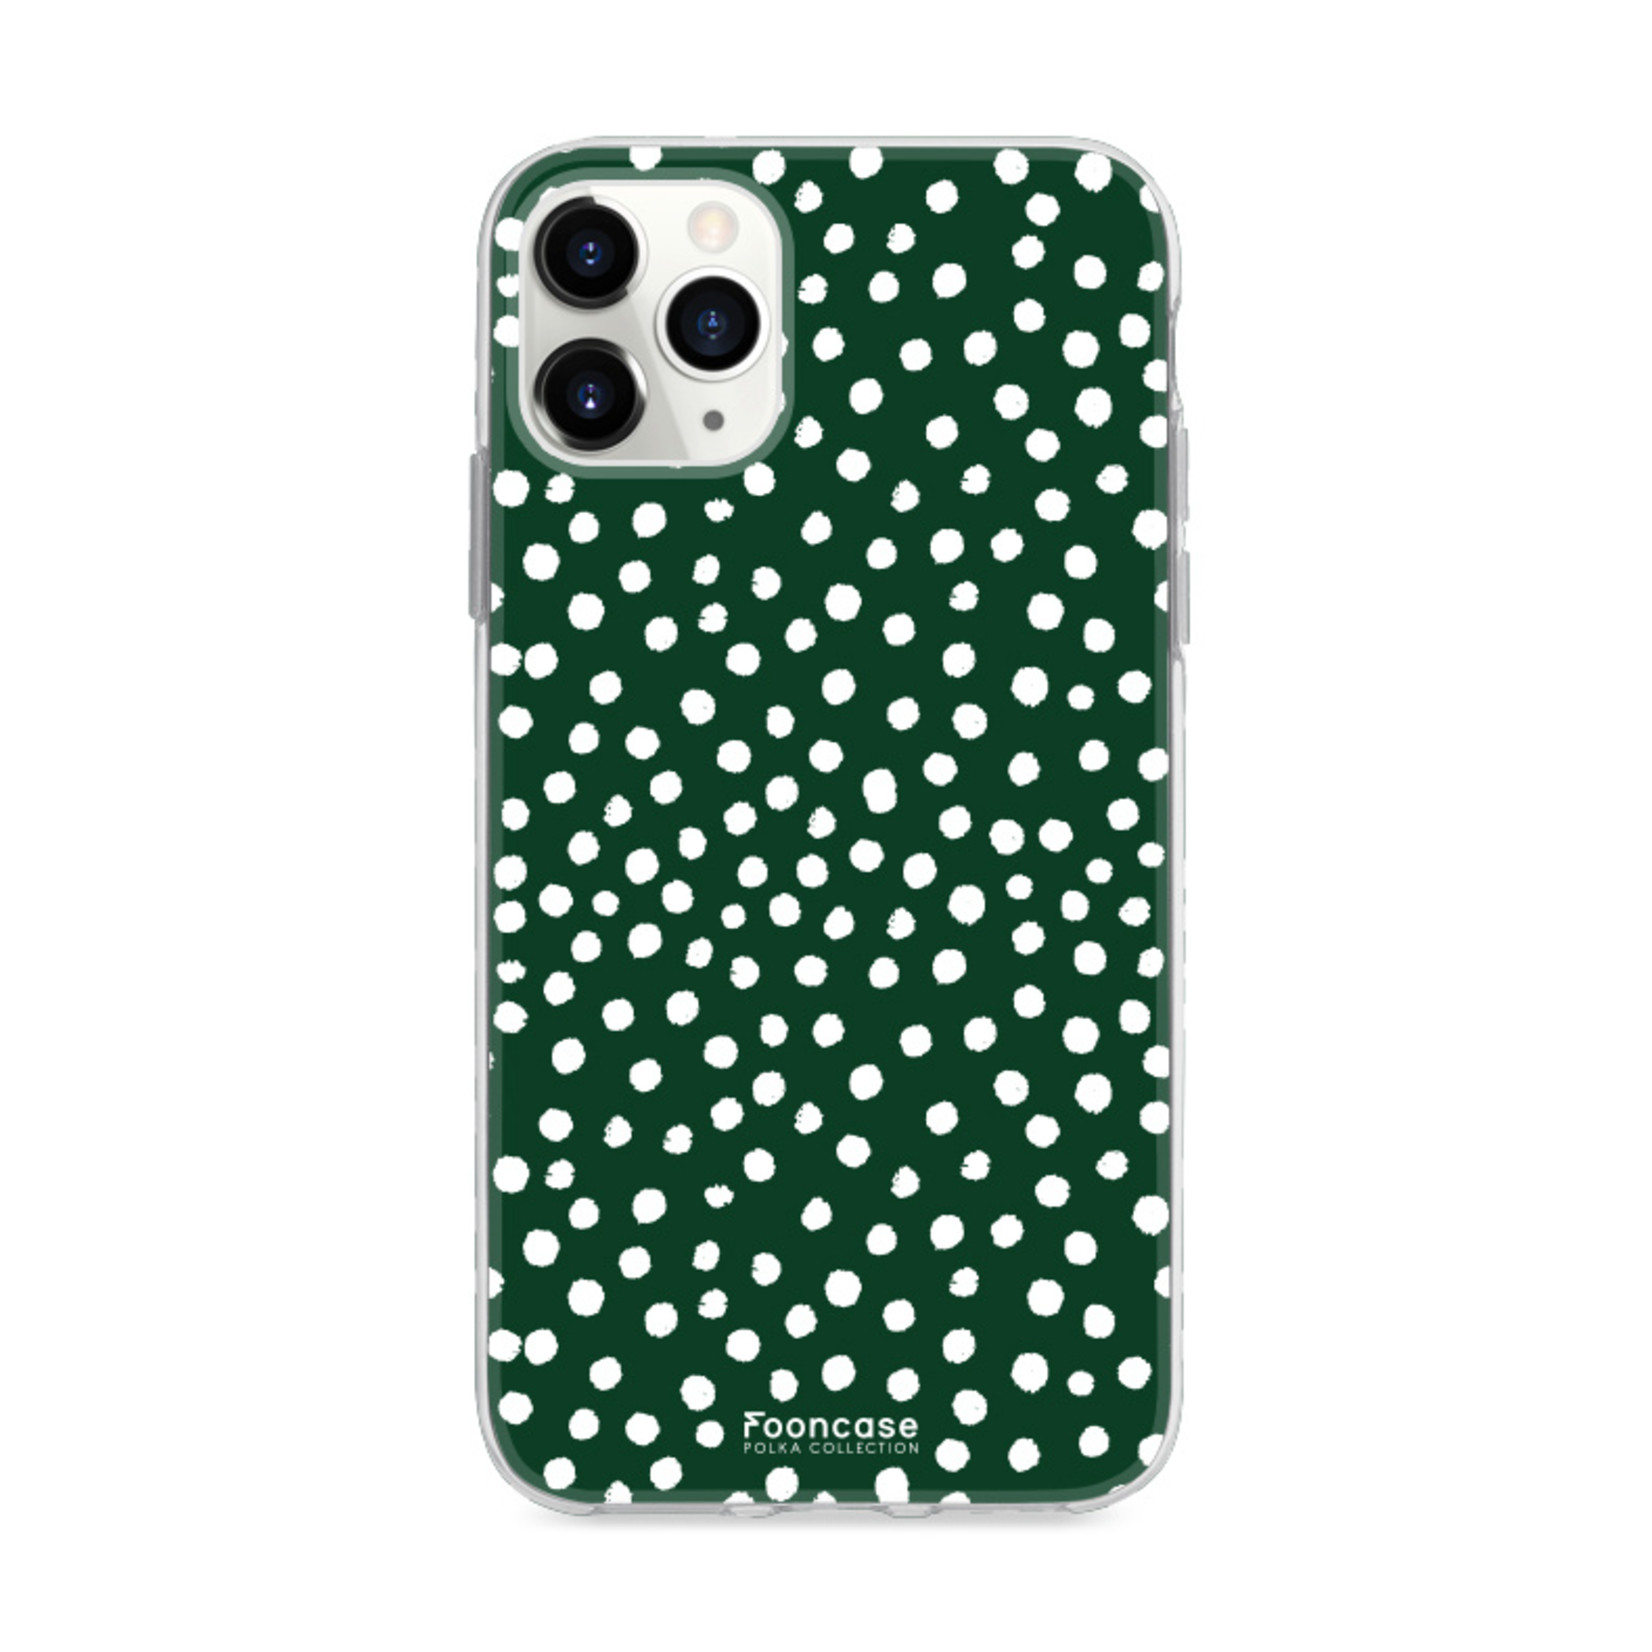 FOONCASE IPhone 11 Pro - POLKA COLLECTION / Dark green